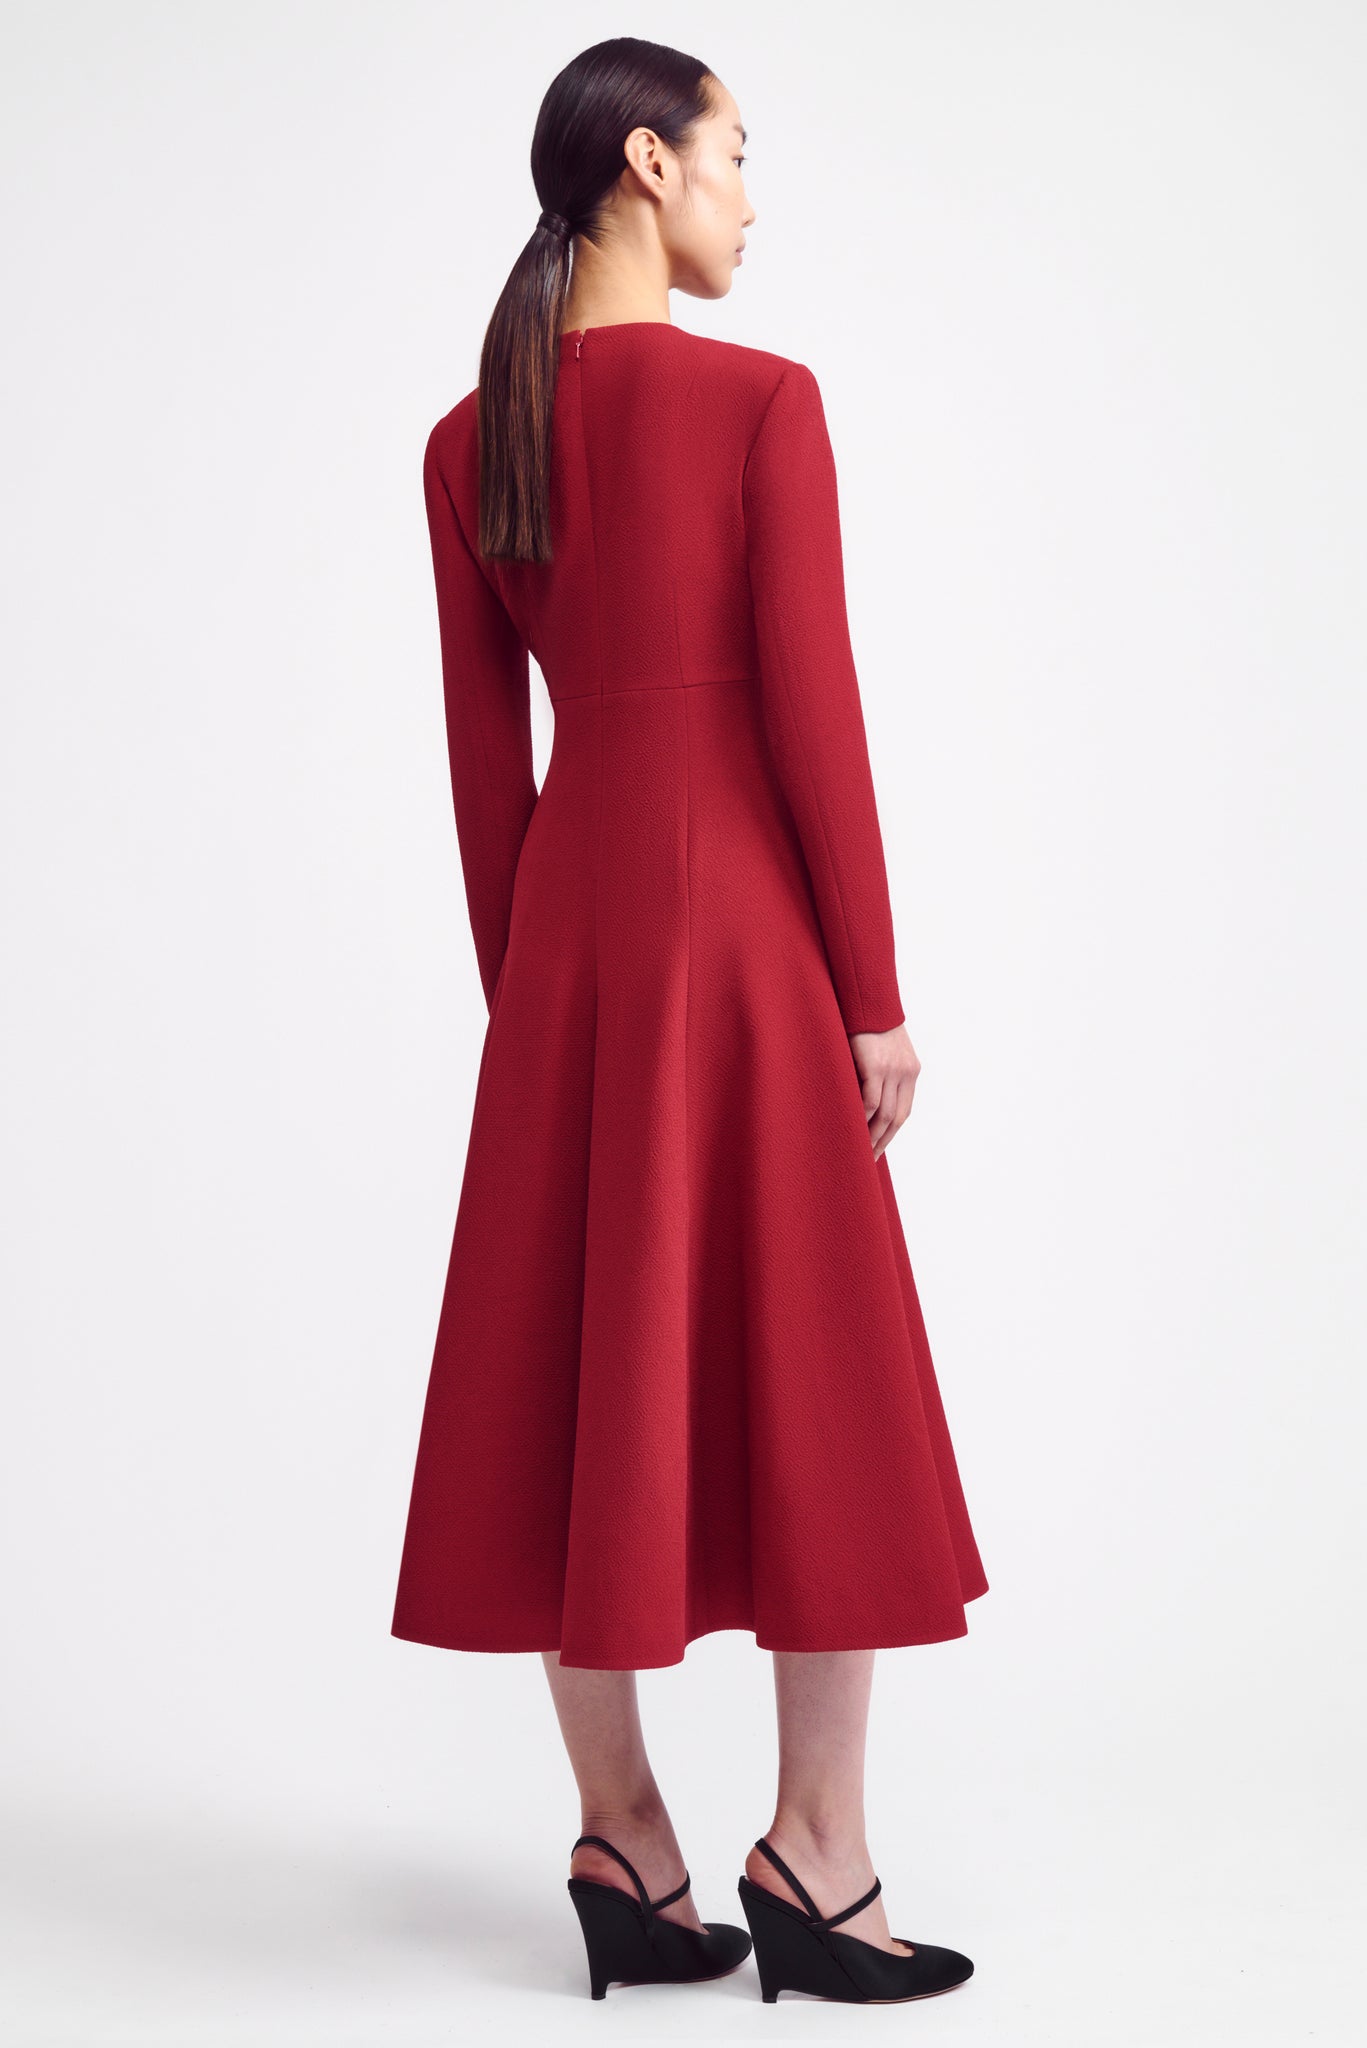 Belgium Dress in Red Double Crepe | Emilia Wickstead